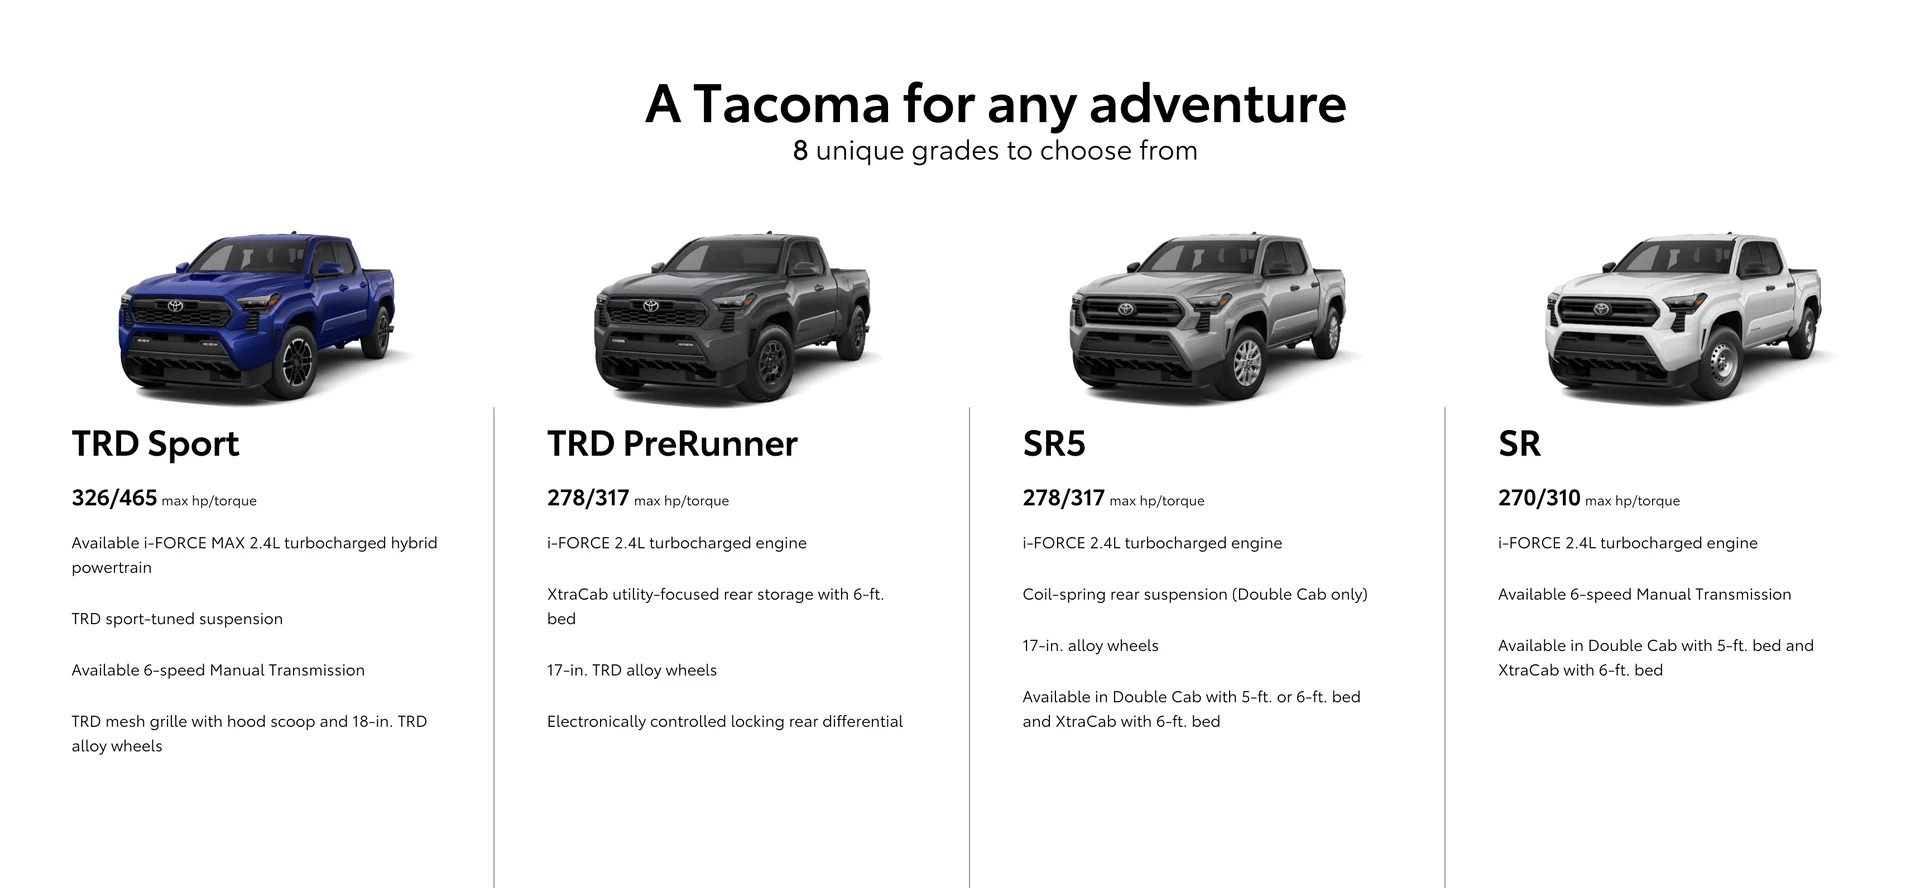 2024 Tacoma Trims/Models Comparison on Toyota Site 2024-tacoma-trims-grades-models-1